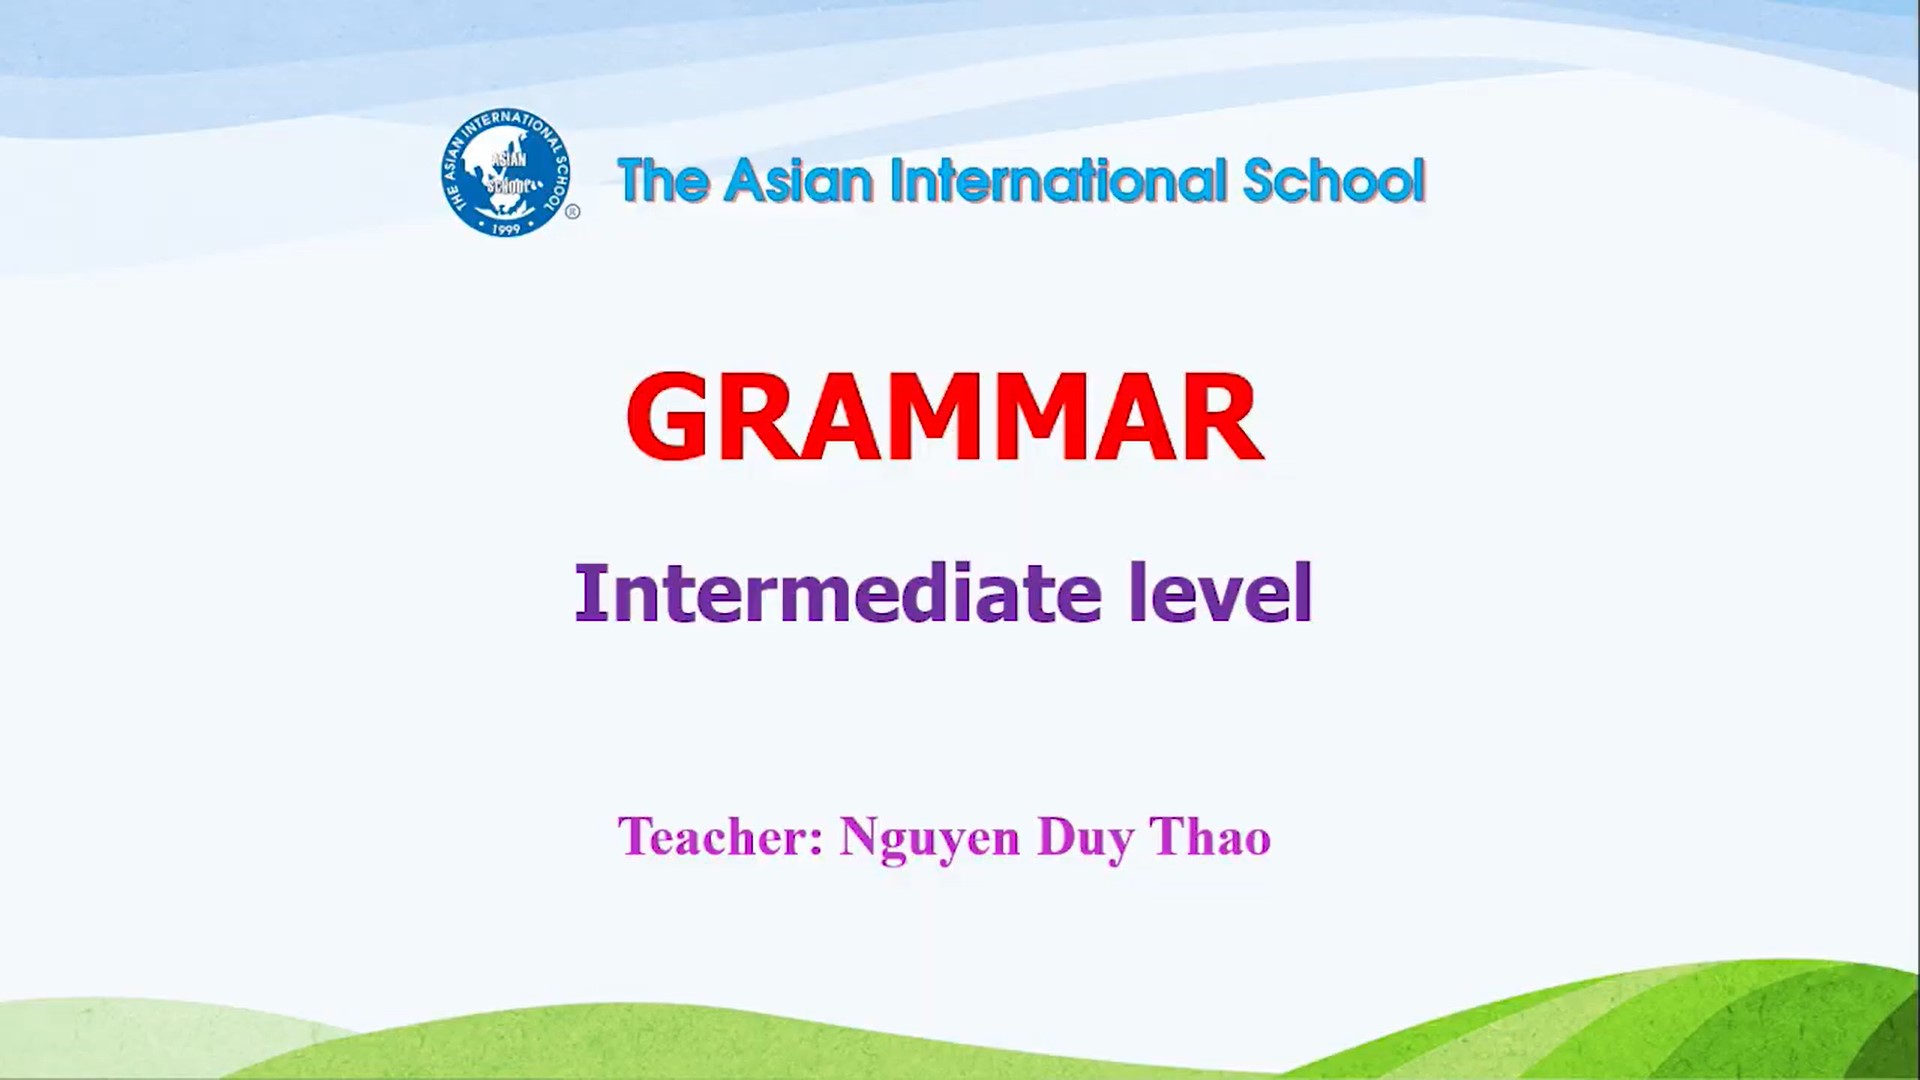 MODALS IN THE PAST - Teacher: Mr. Nguyen Duy Thao | Grammar - Intermediate level